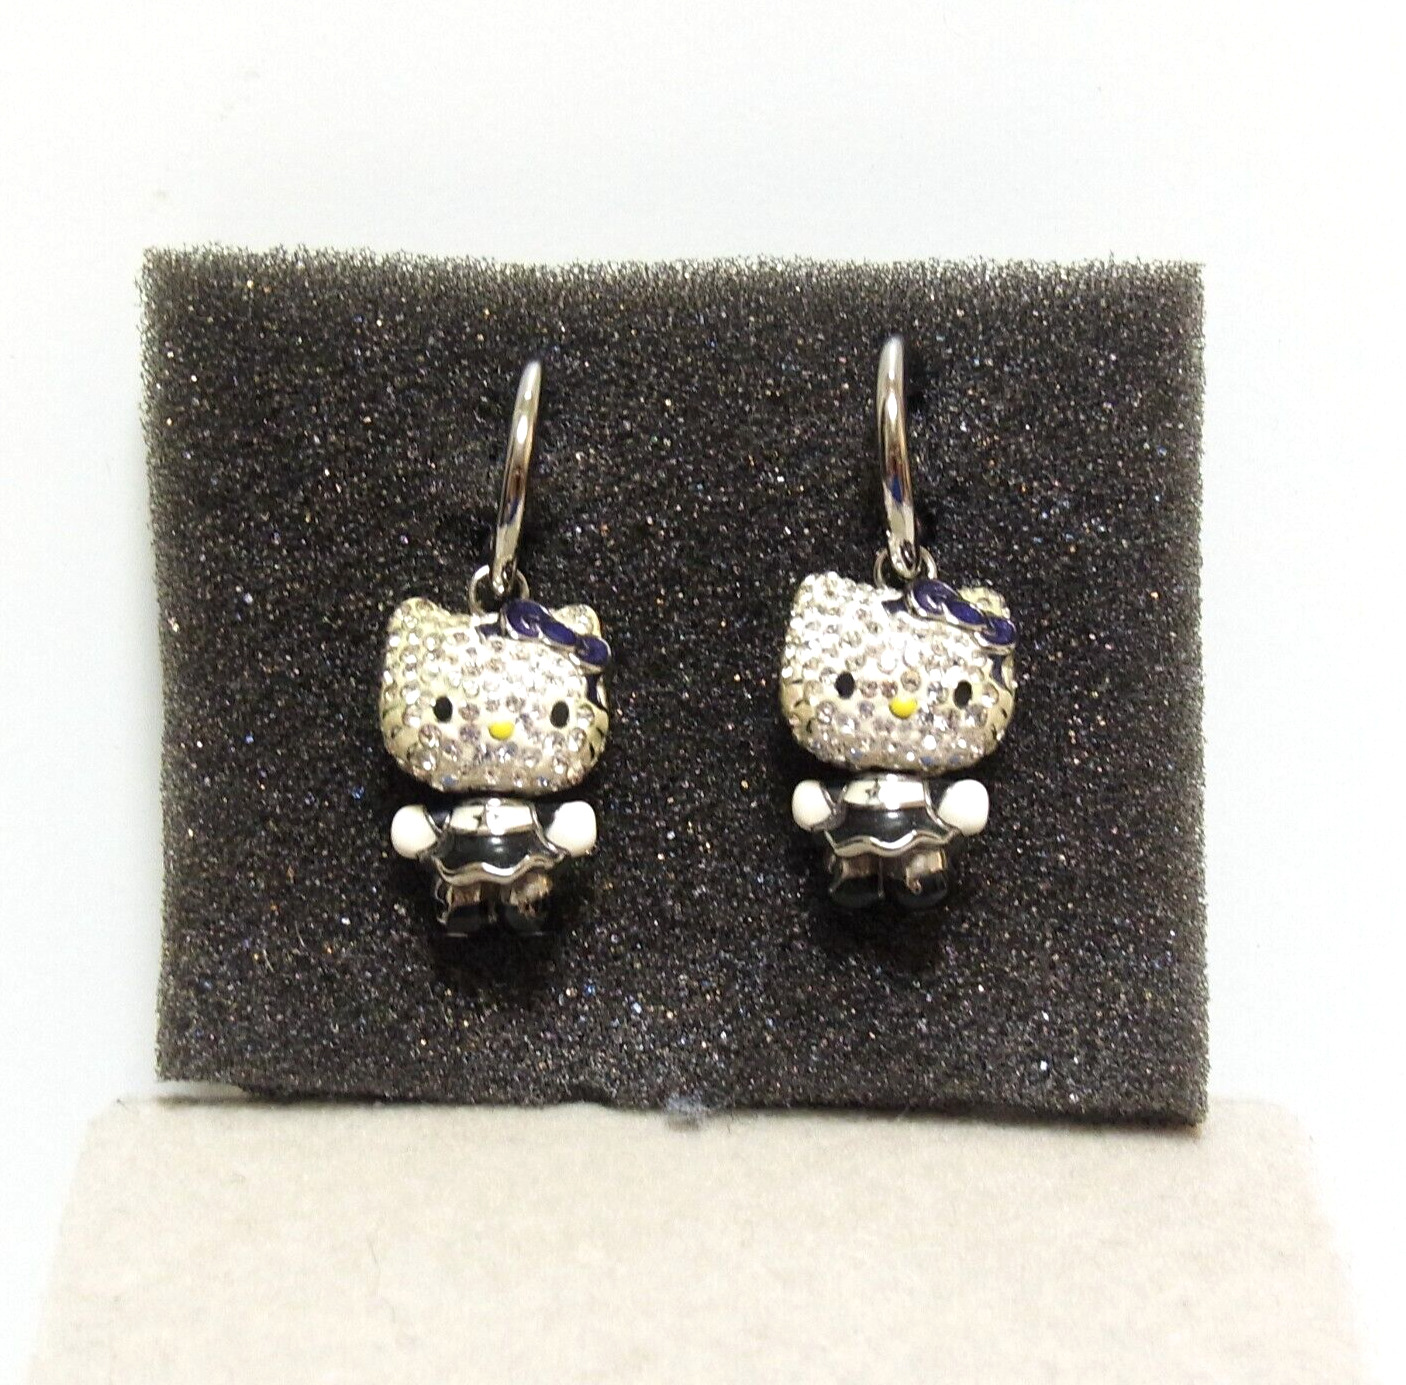 Swarovski Hello Kitty Earrings Sanrio Collaboration Jewelry no Box japan 0.7in